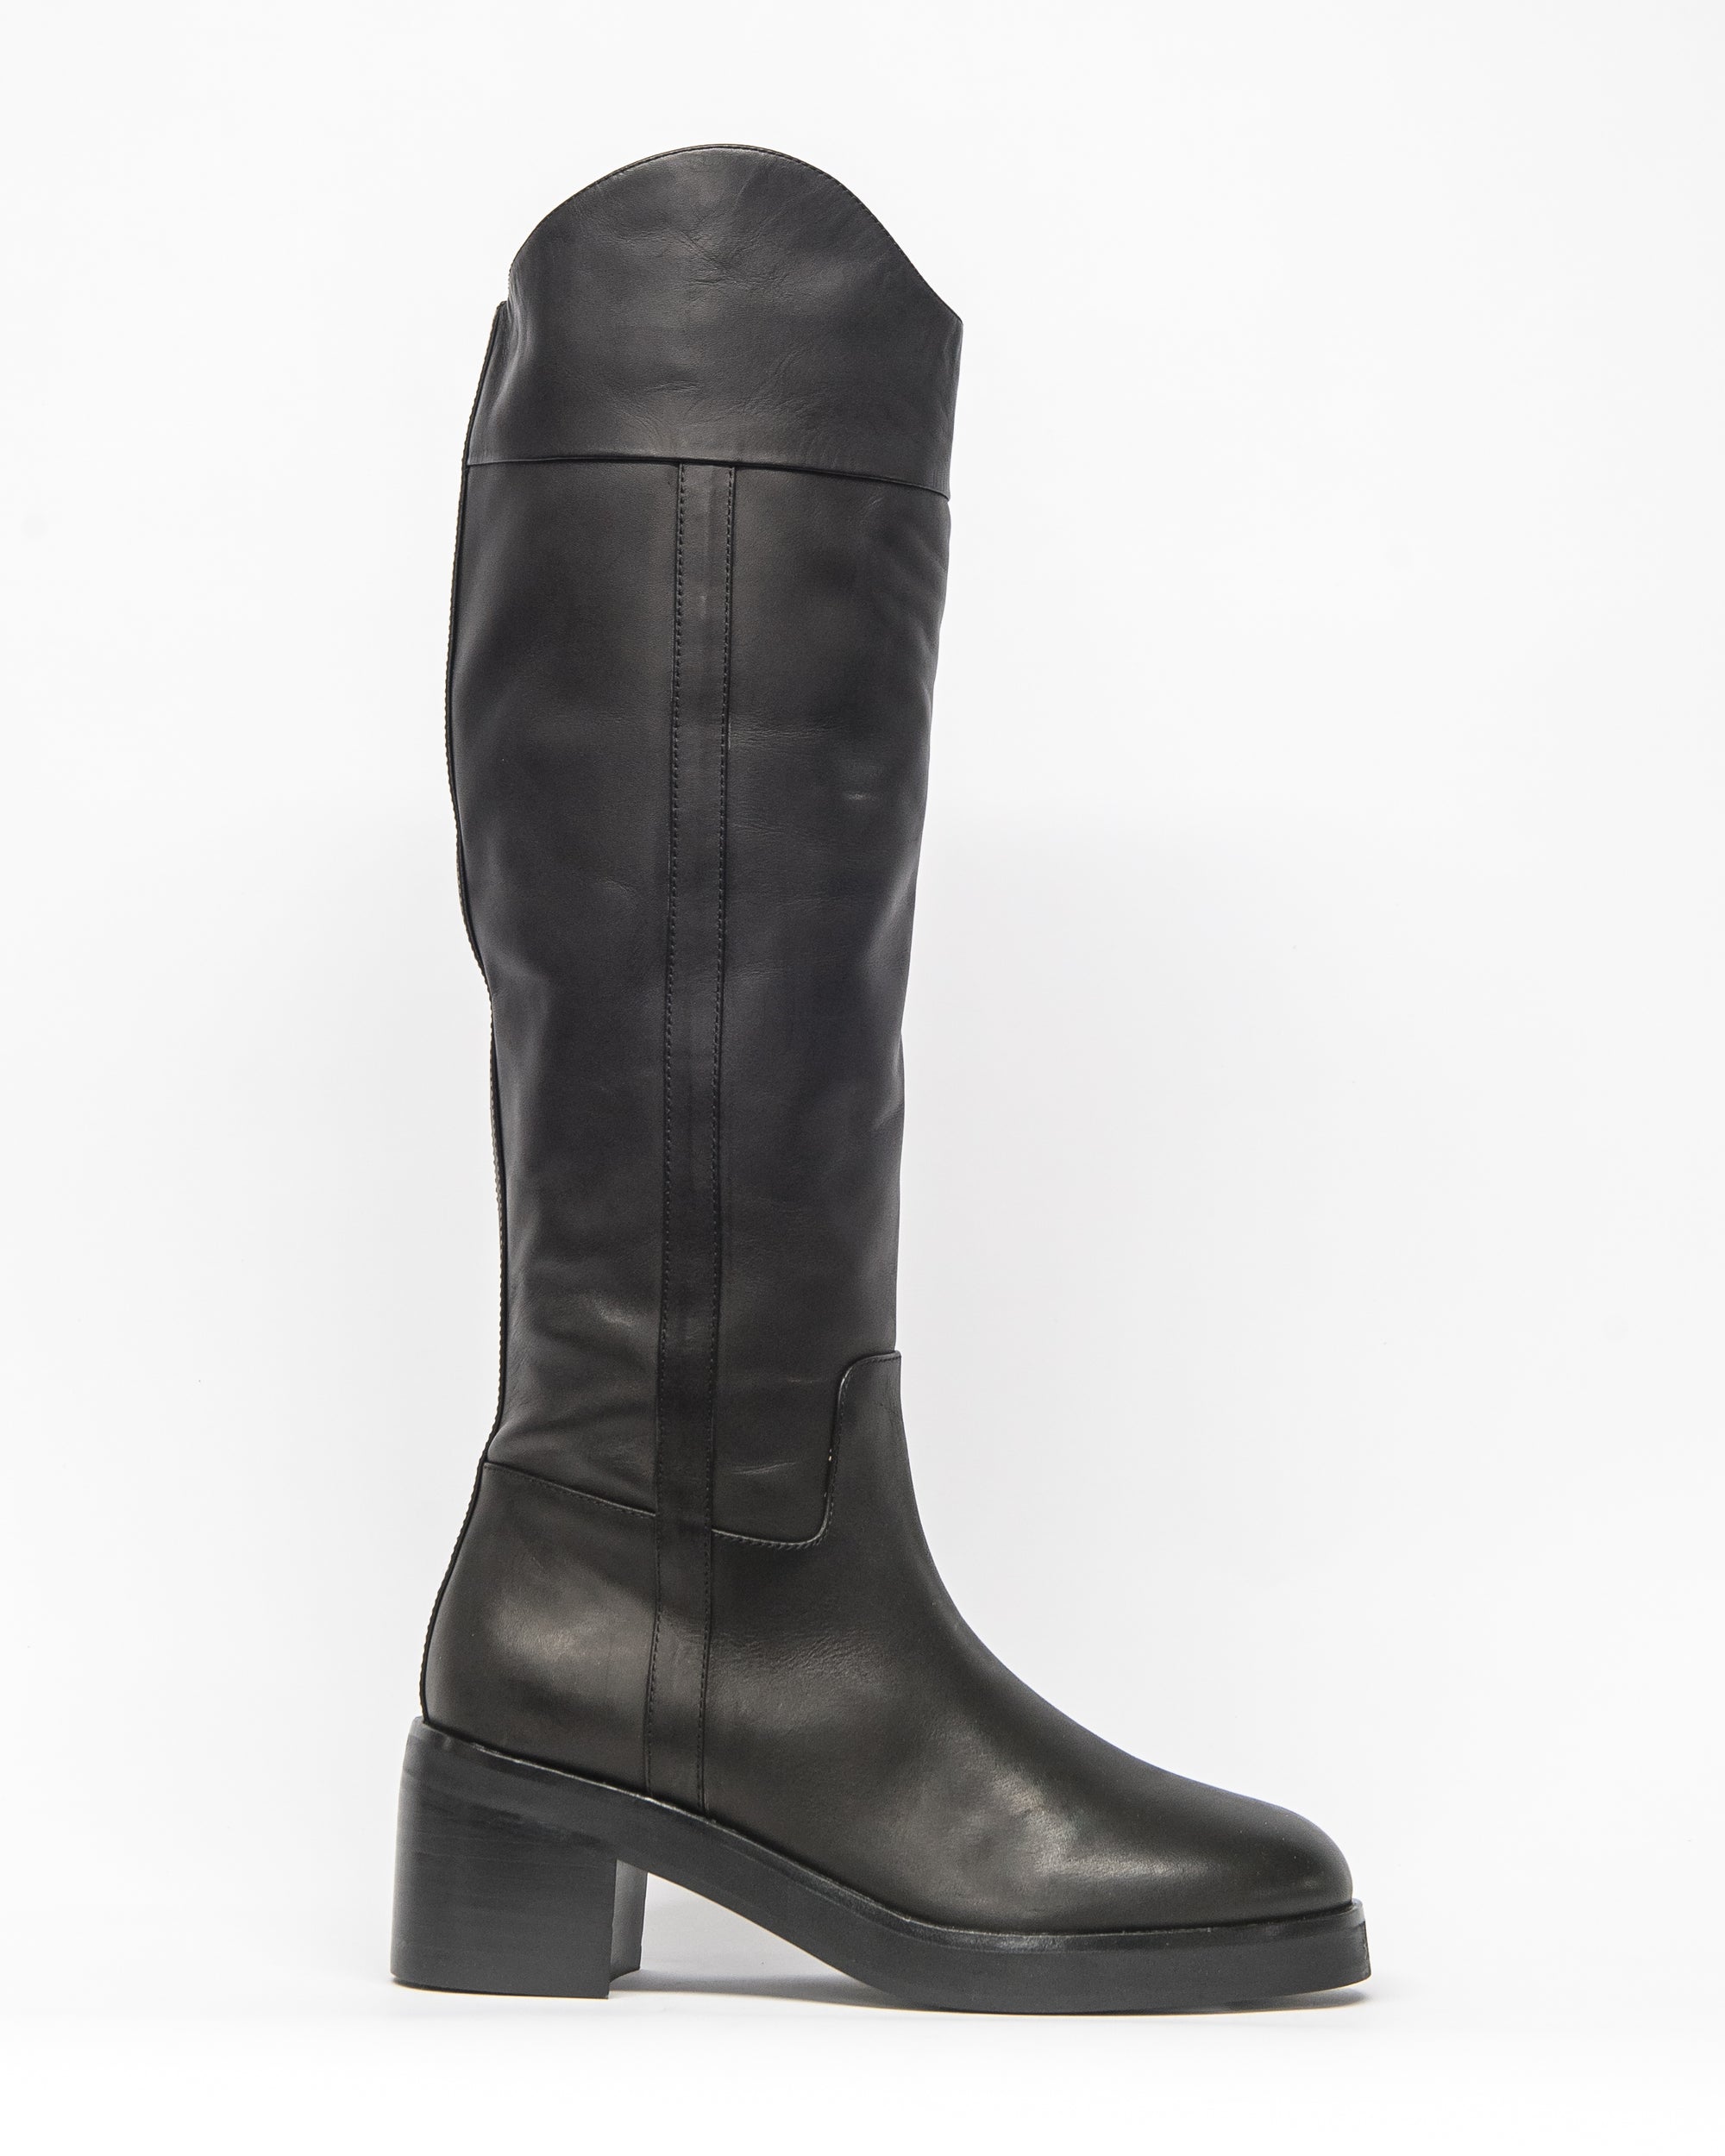 baron boot - black leather